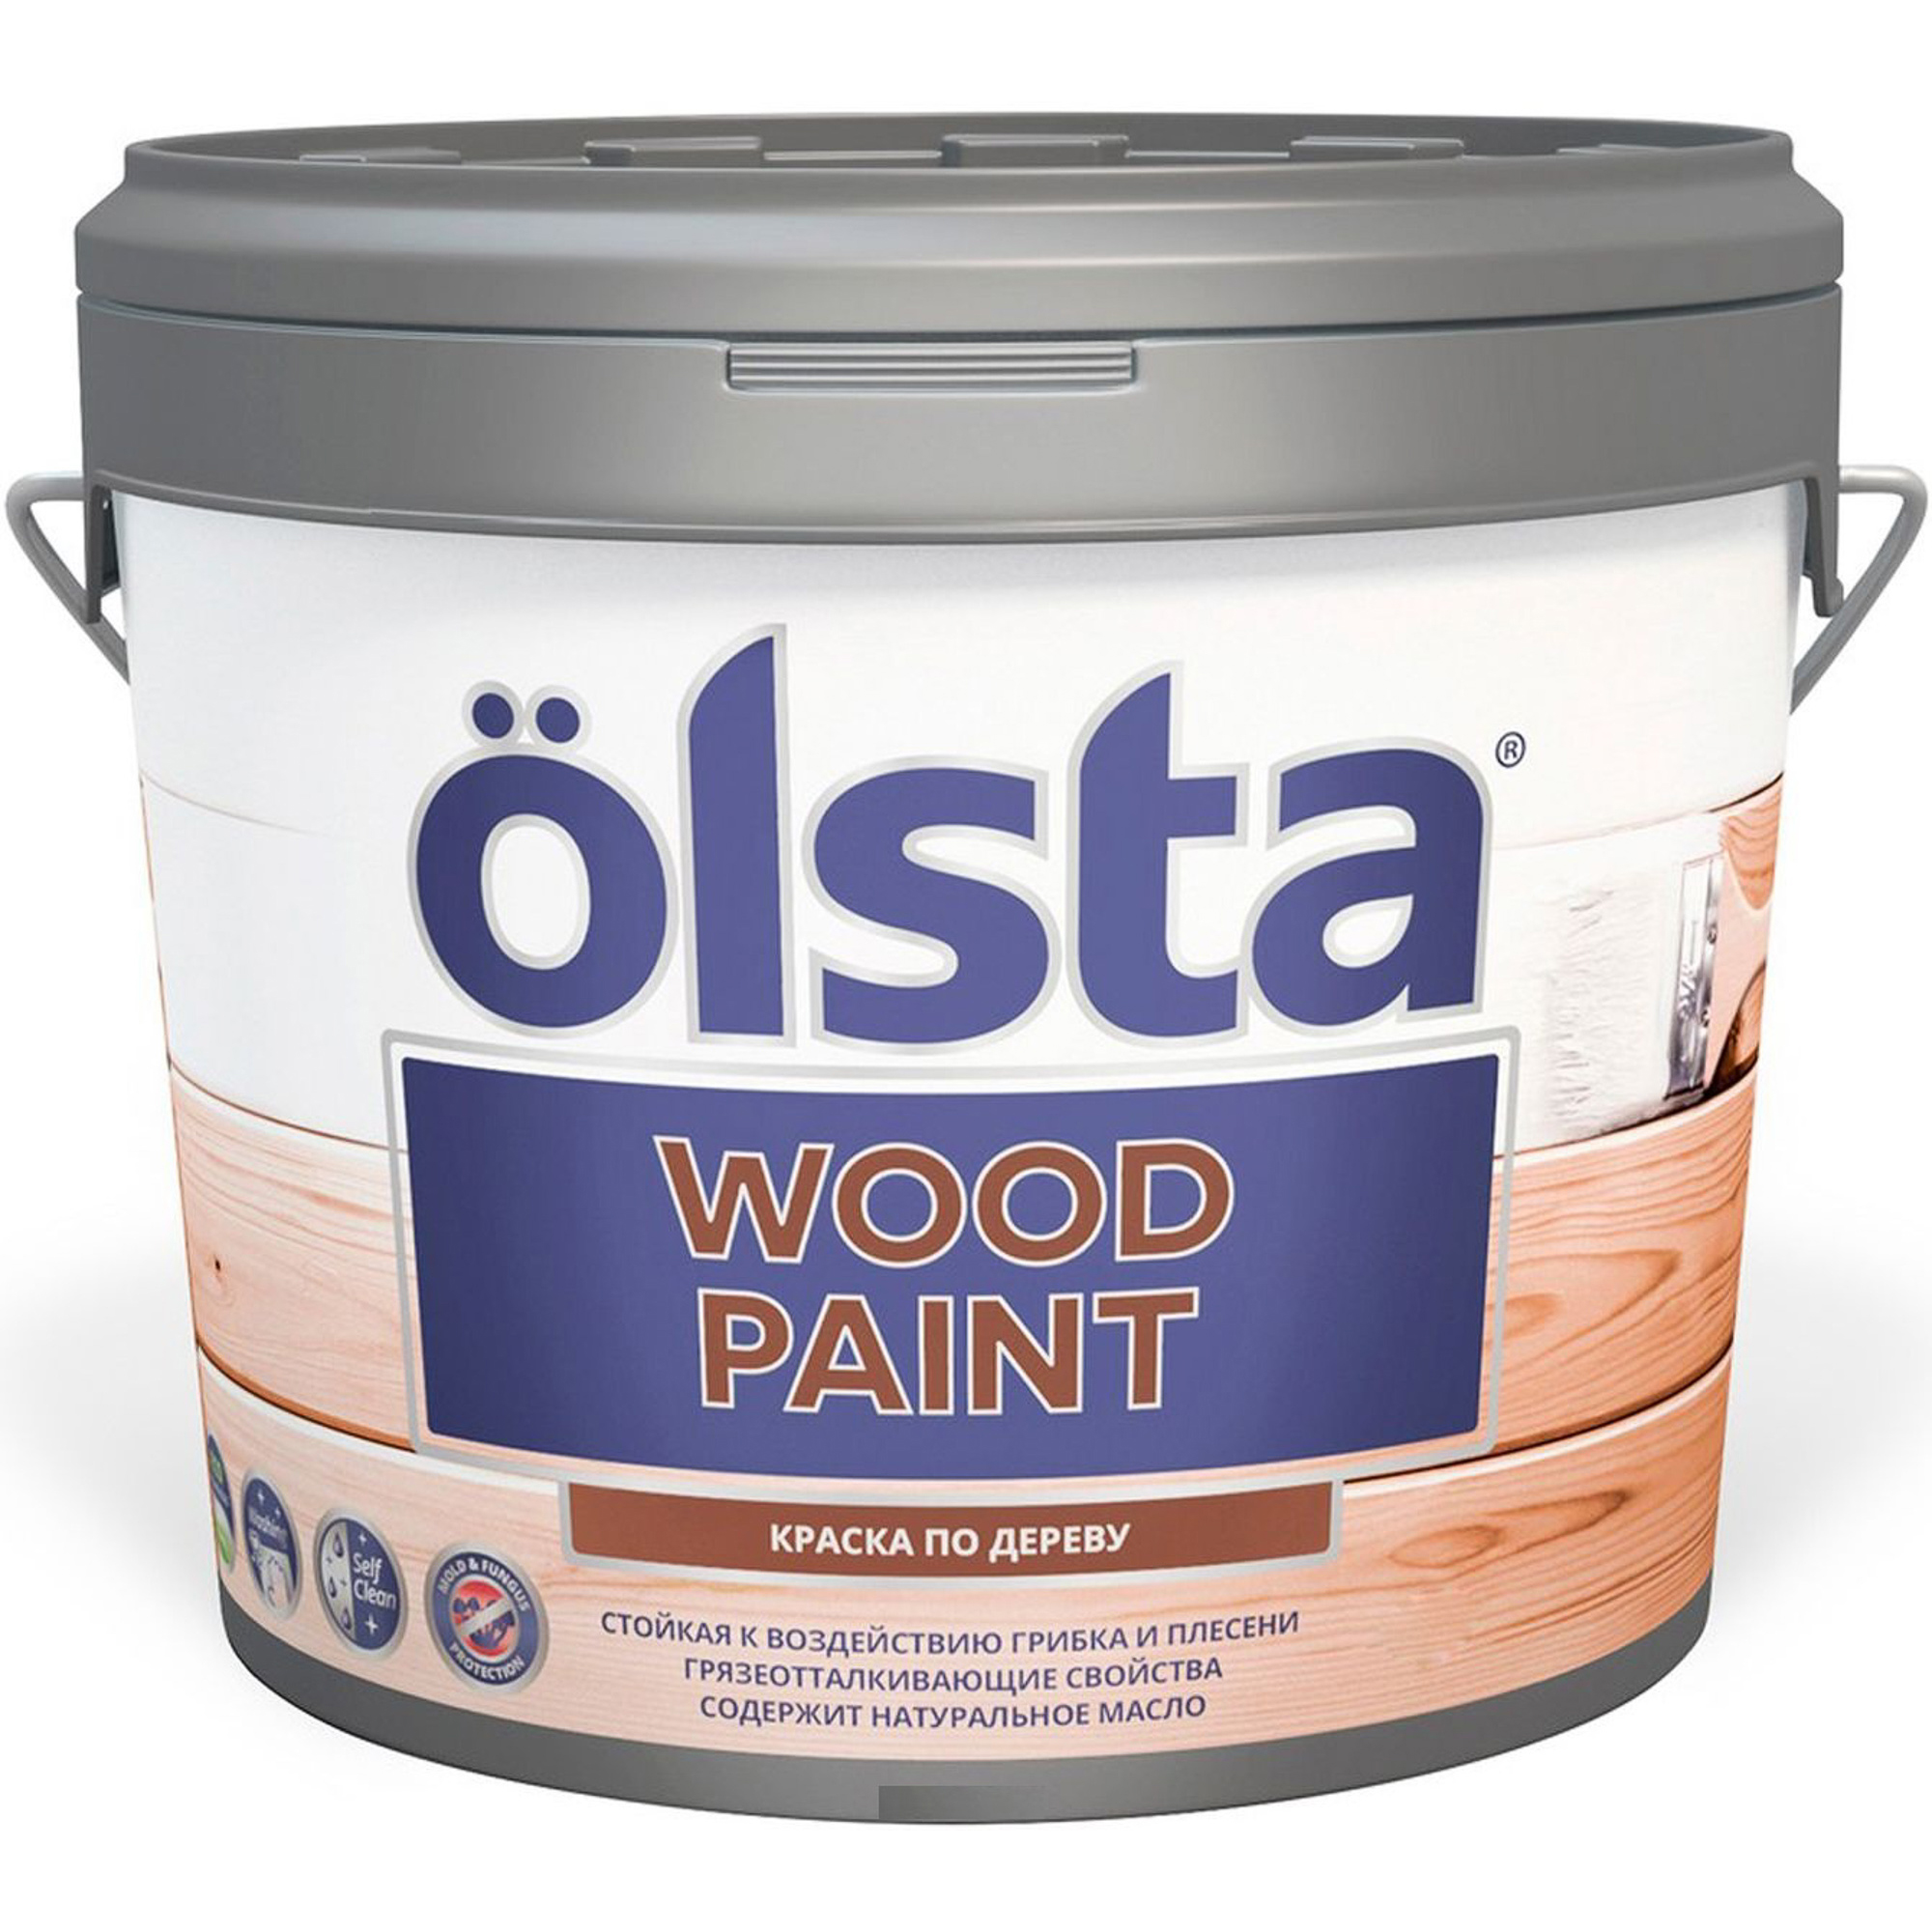 Краска Olsta wood paint для дерева a 9.0 л